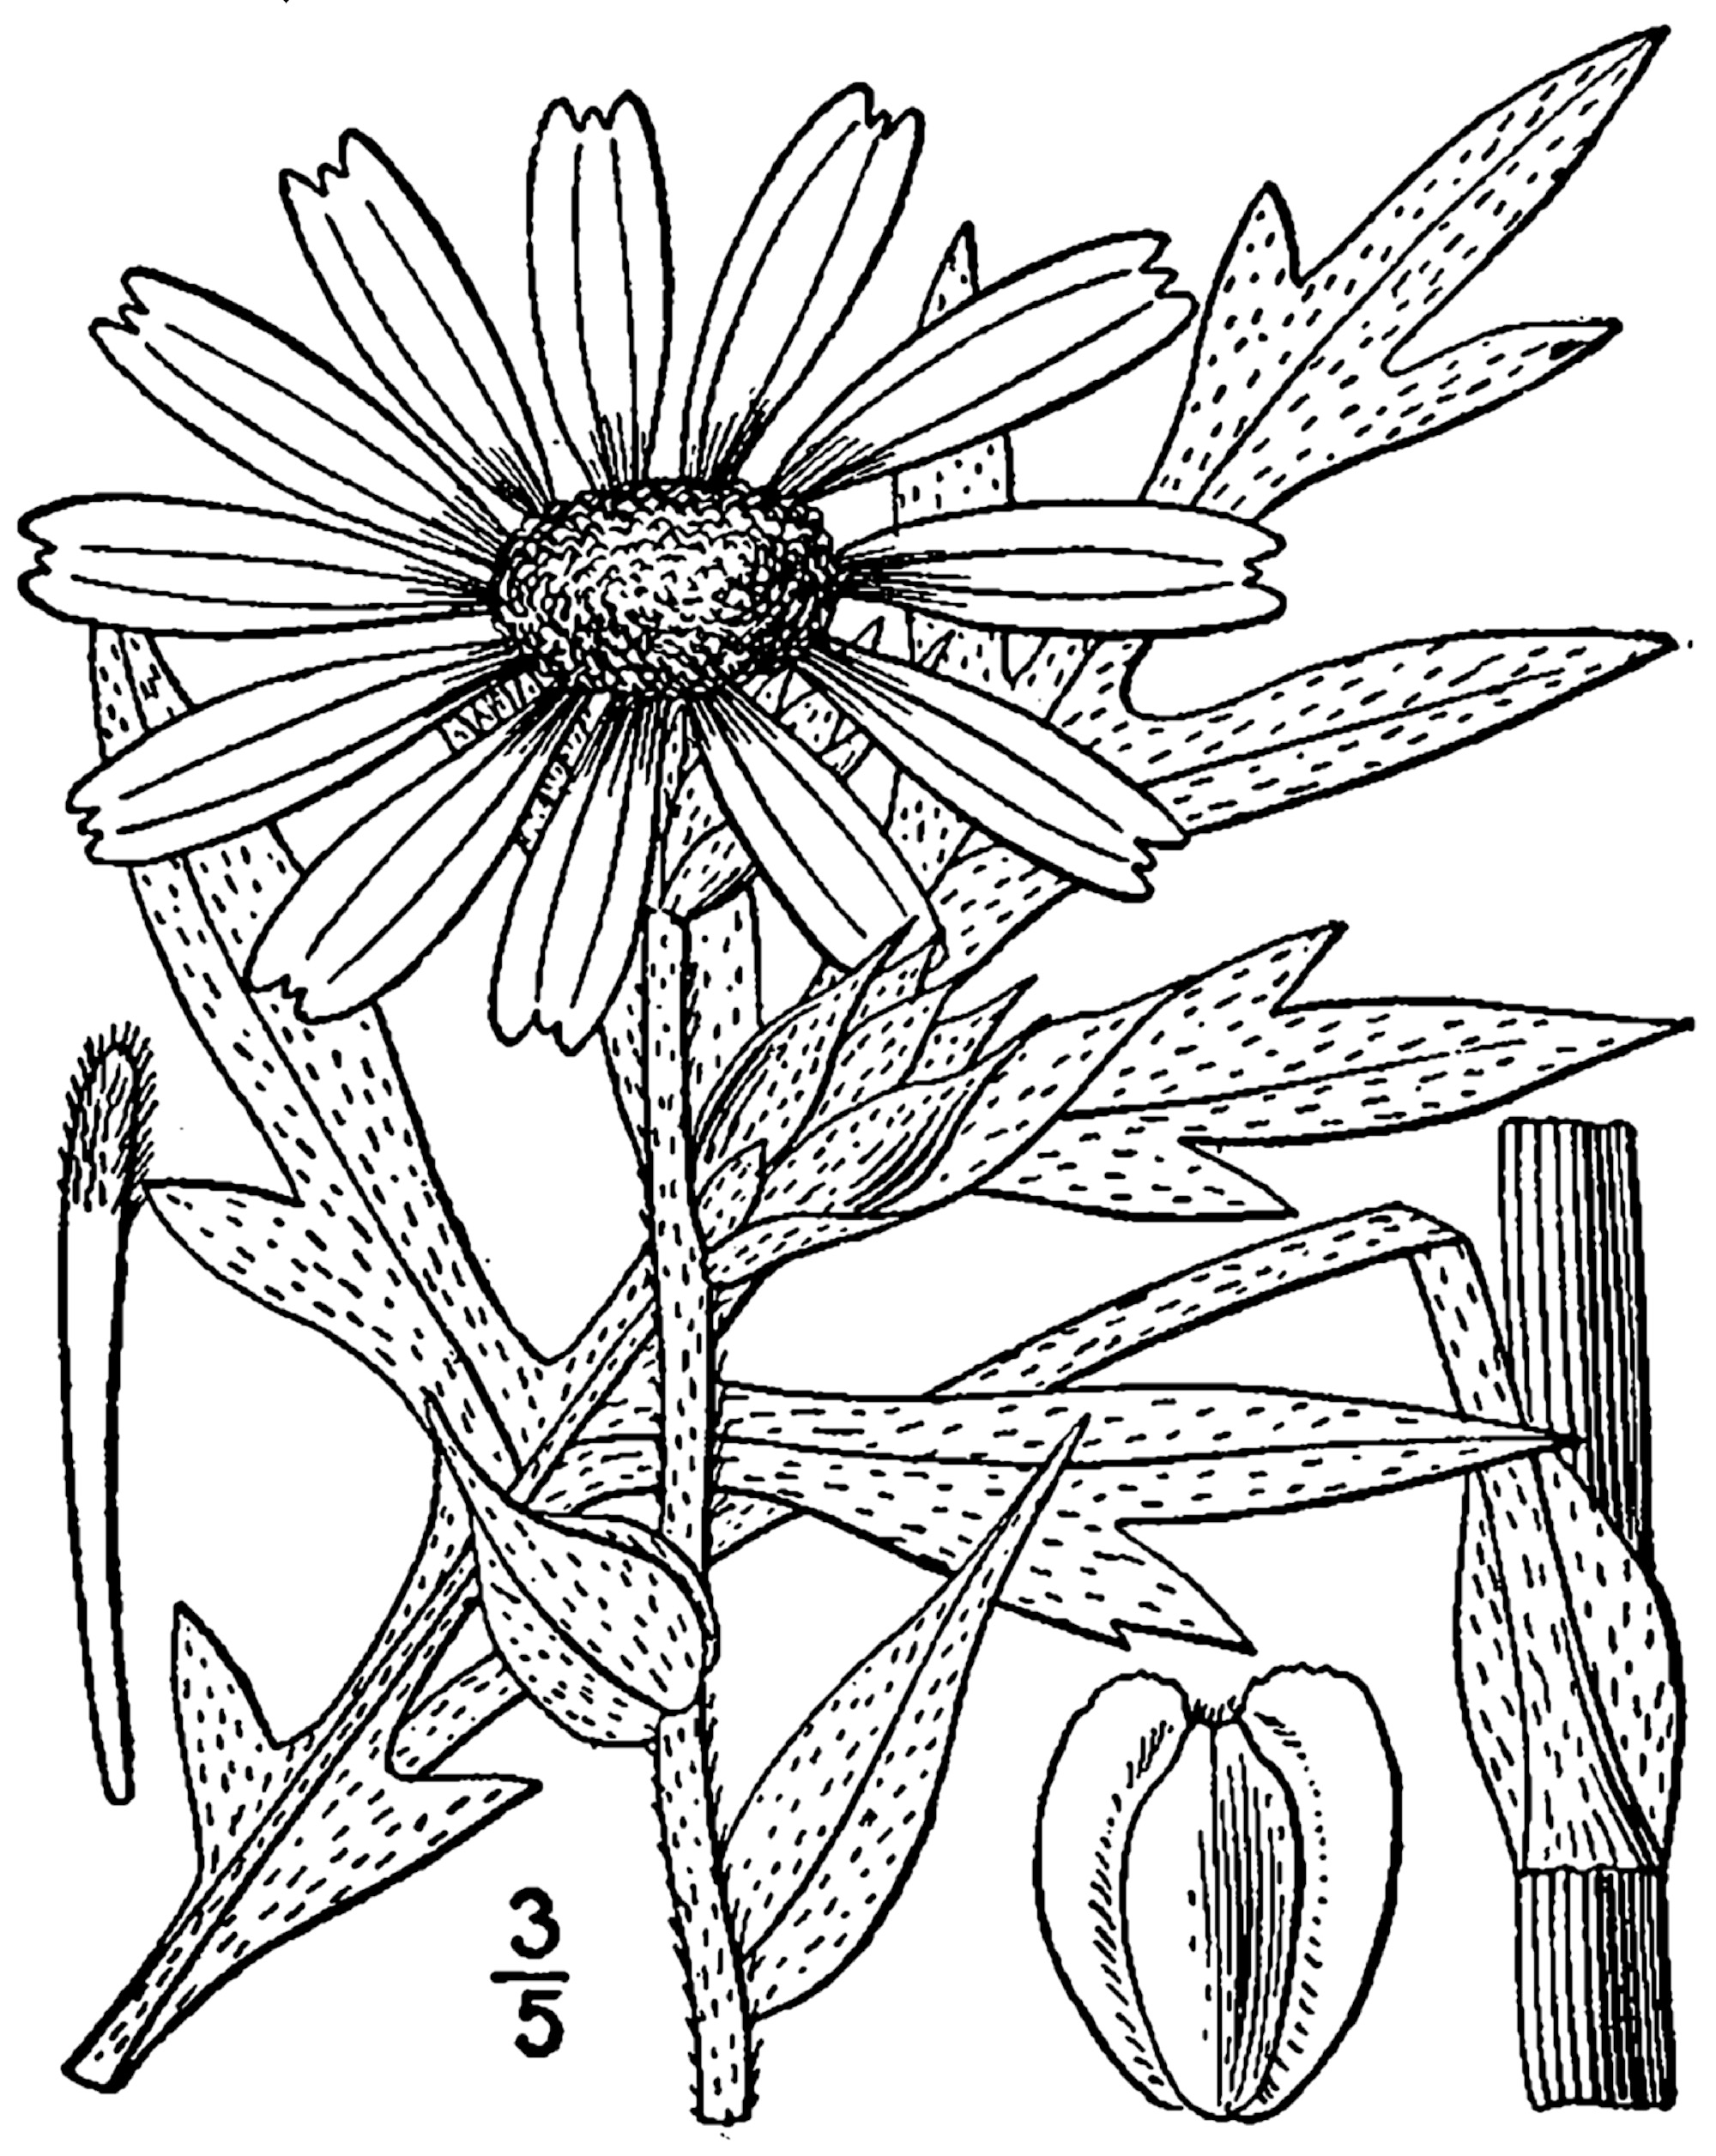 1913 Compass Plant illustration.